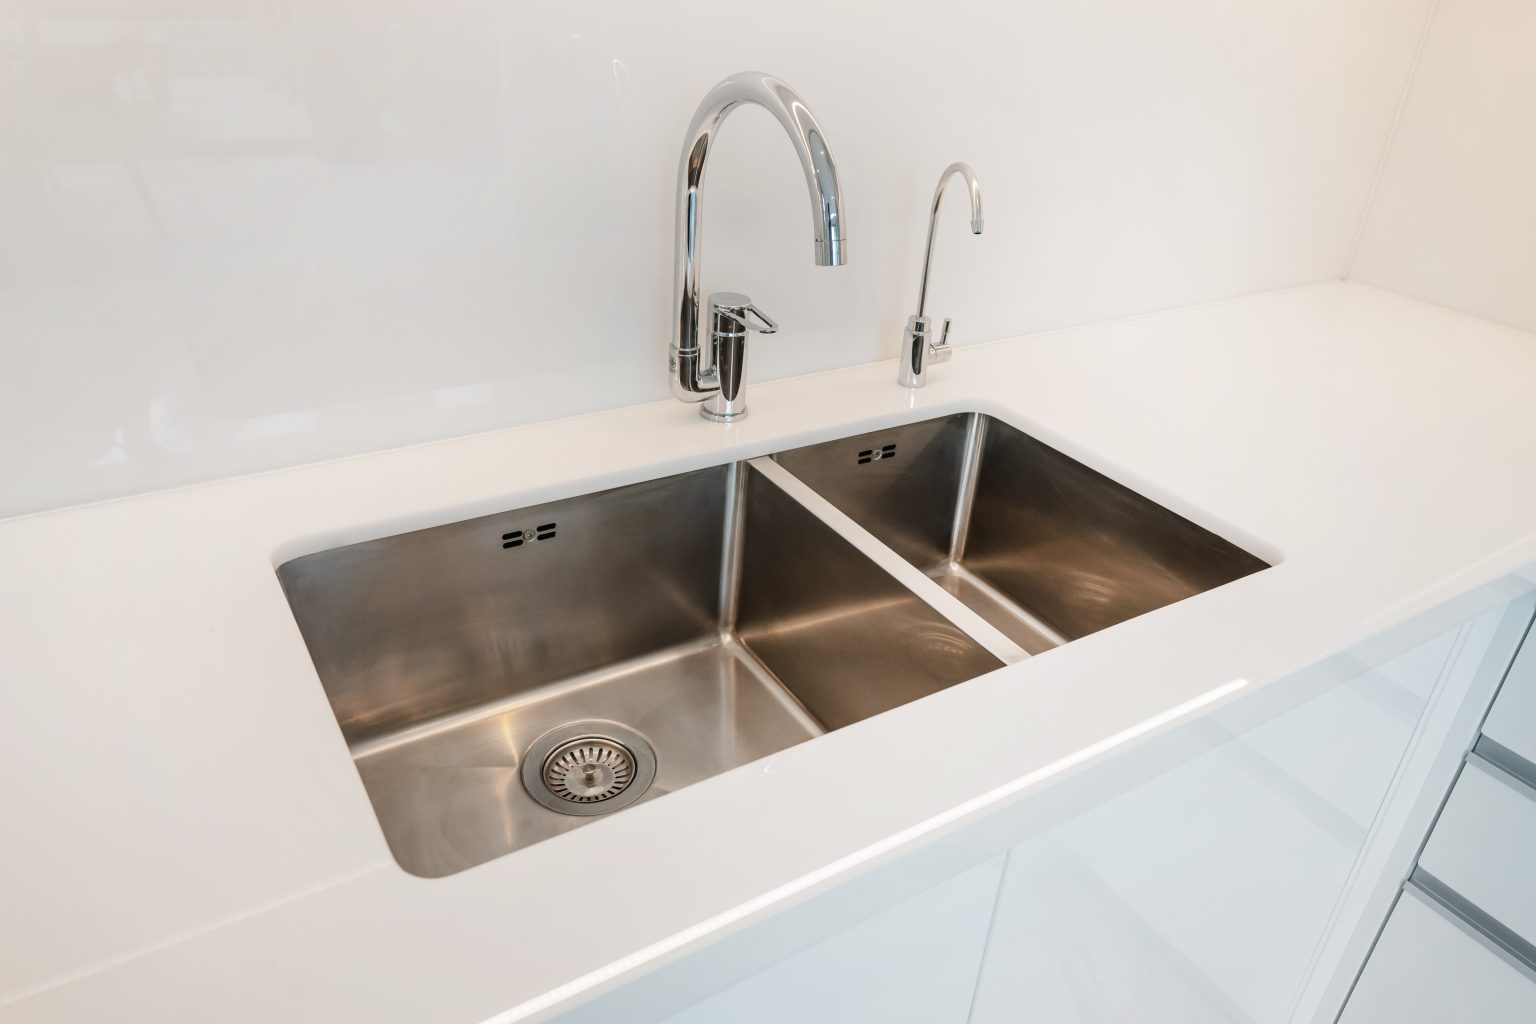 Kitchen-Sink-Ideas-for-Maximising-Utility-4-1536x1024.jpg